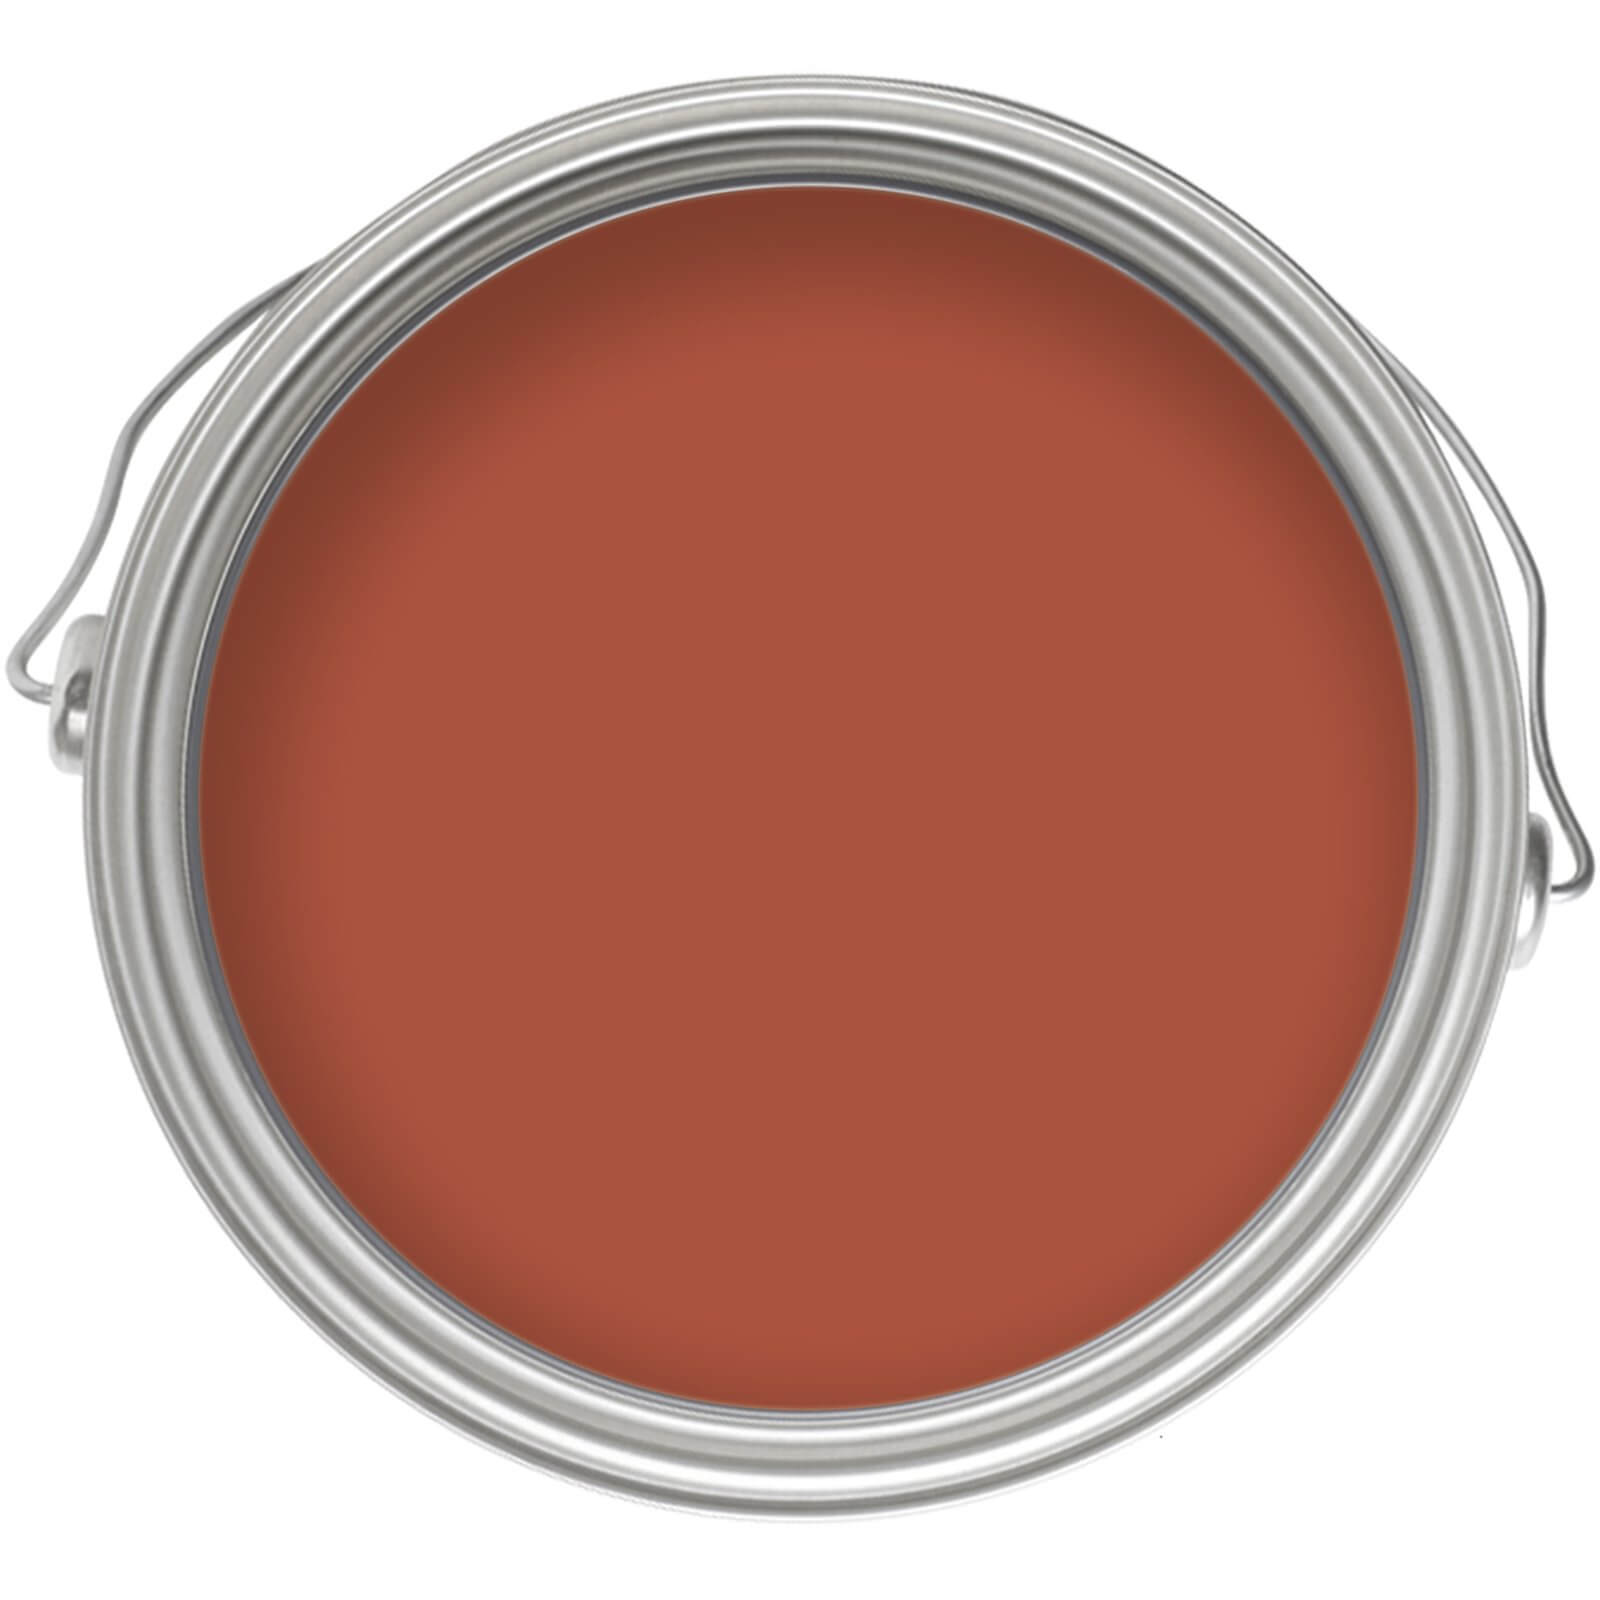 Homebase Silk Emulsion Paint Orange Glow - 2.5L